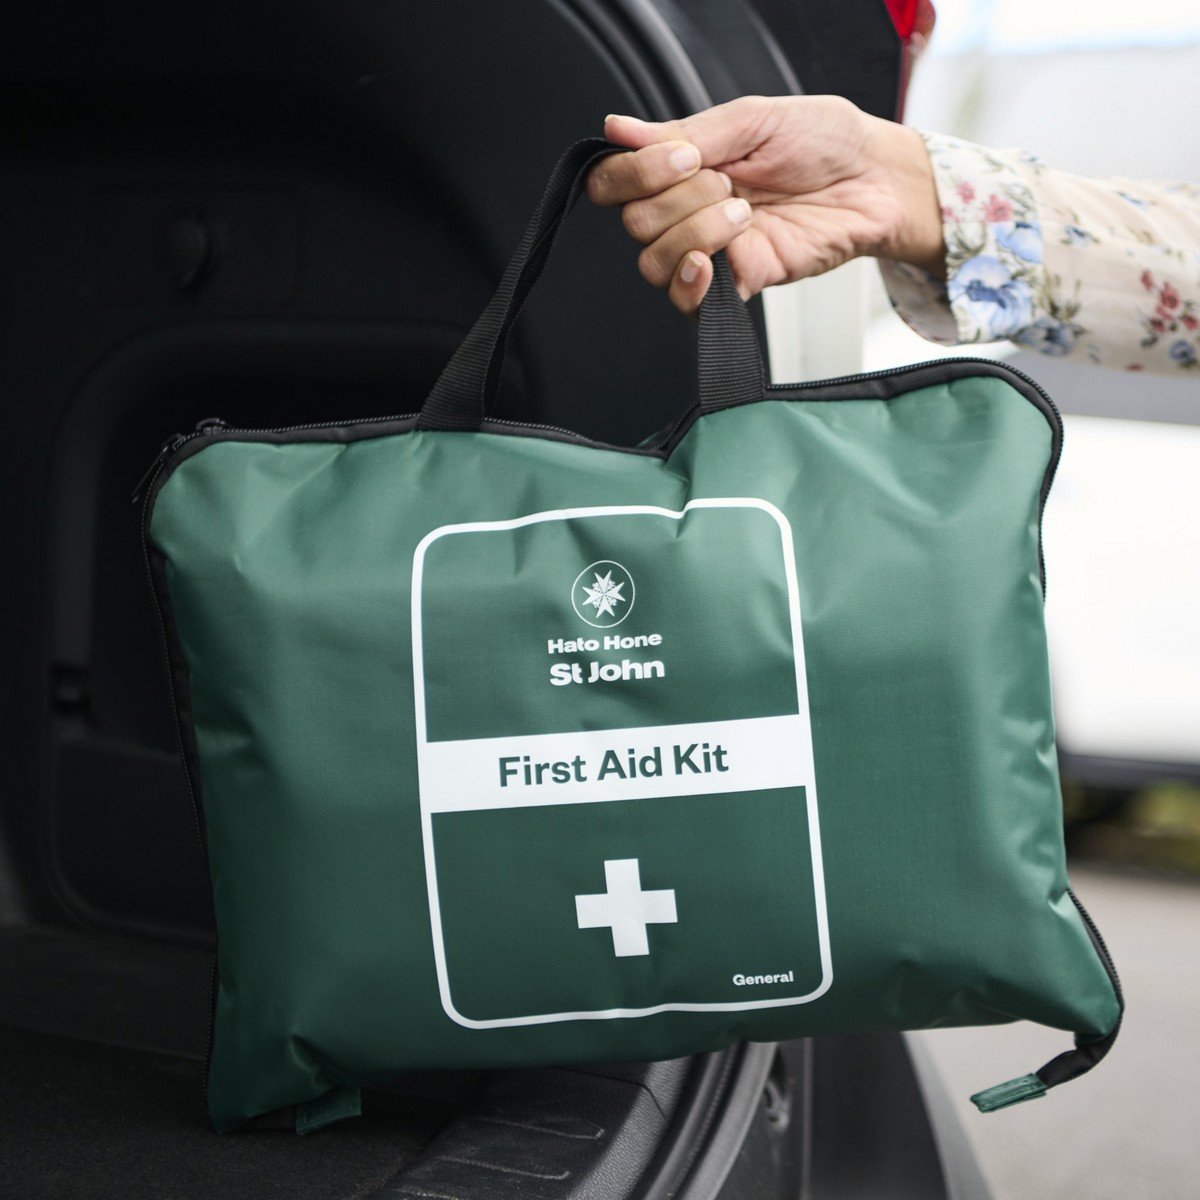 St John General  First Aid Kit